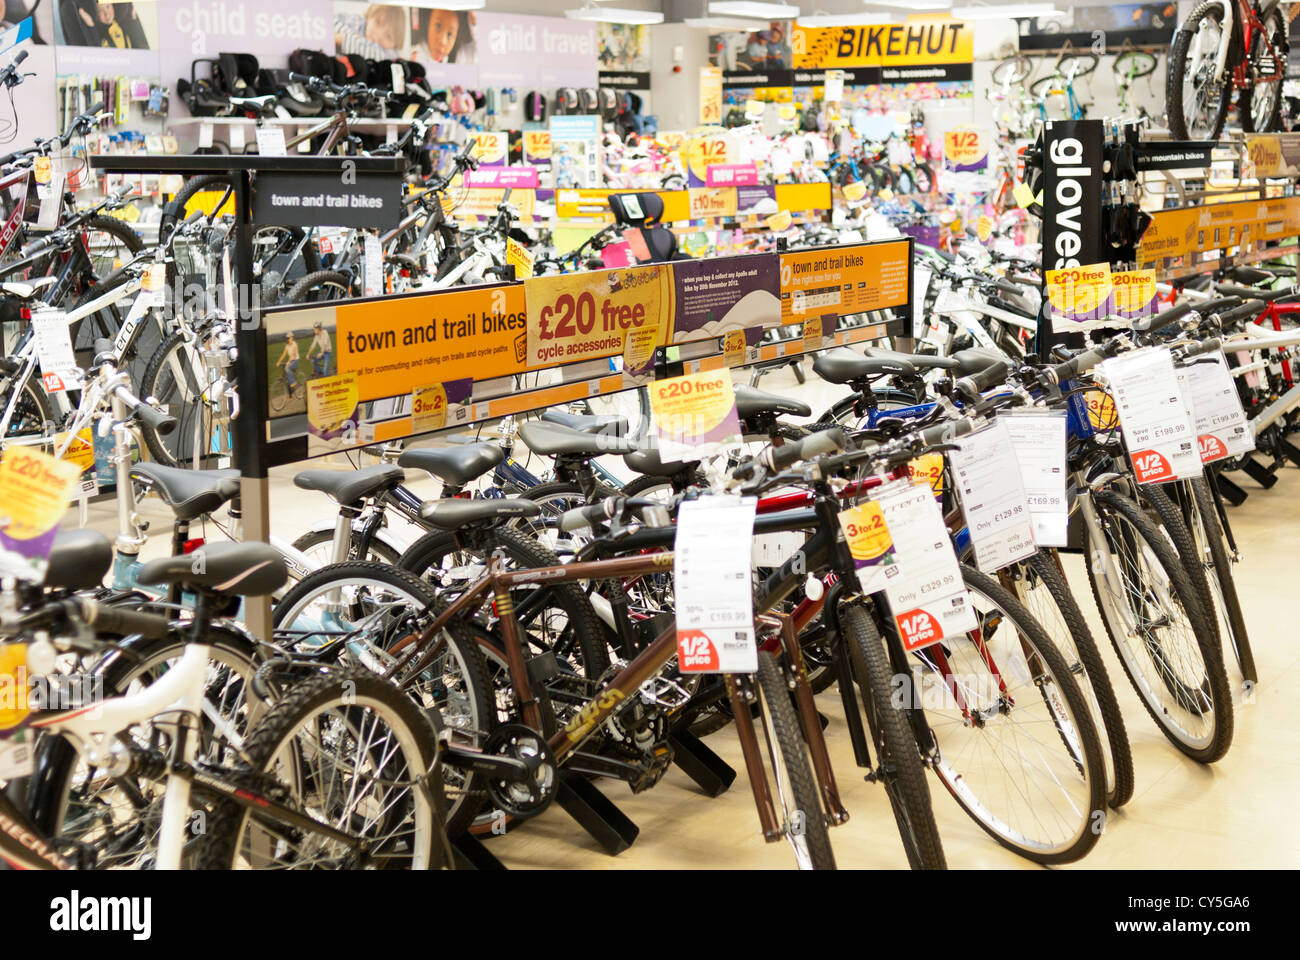 Bicycle sales -Fotos und -Bildmaterial in hoher Auflösung – Alamy